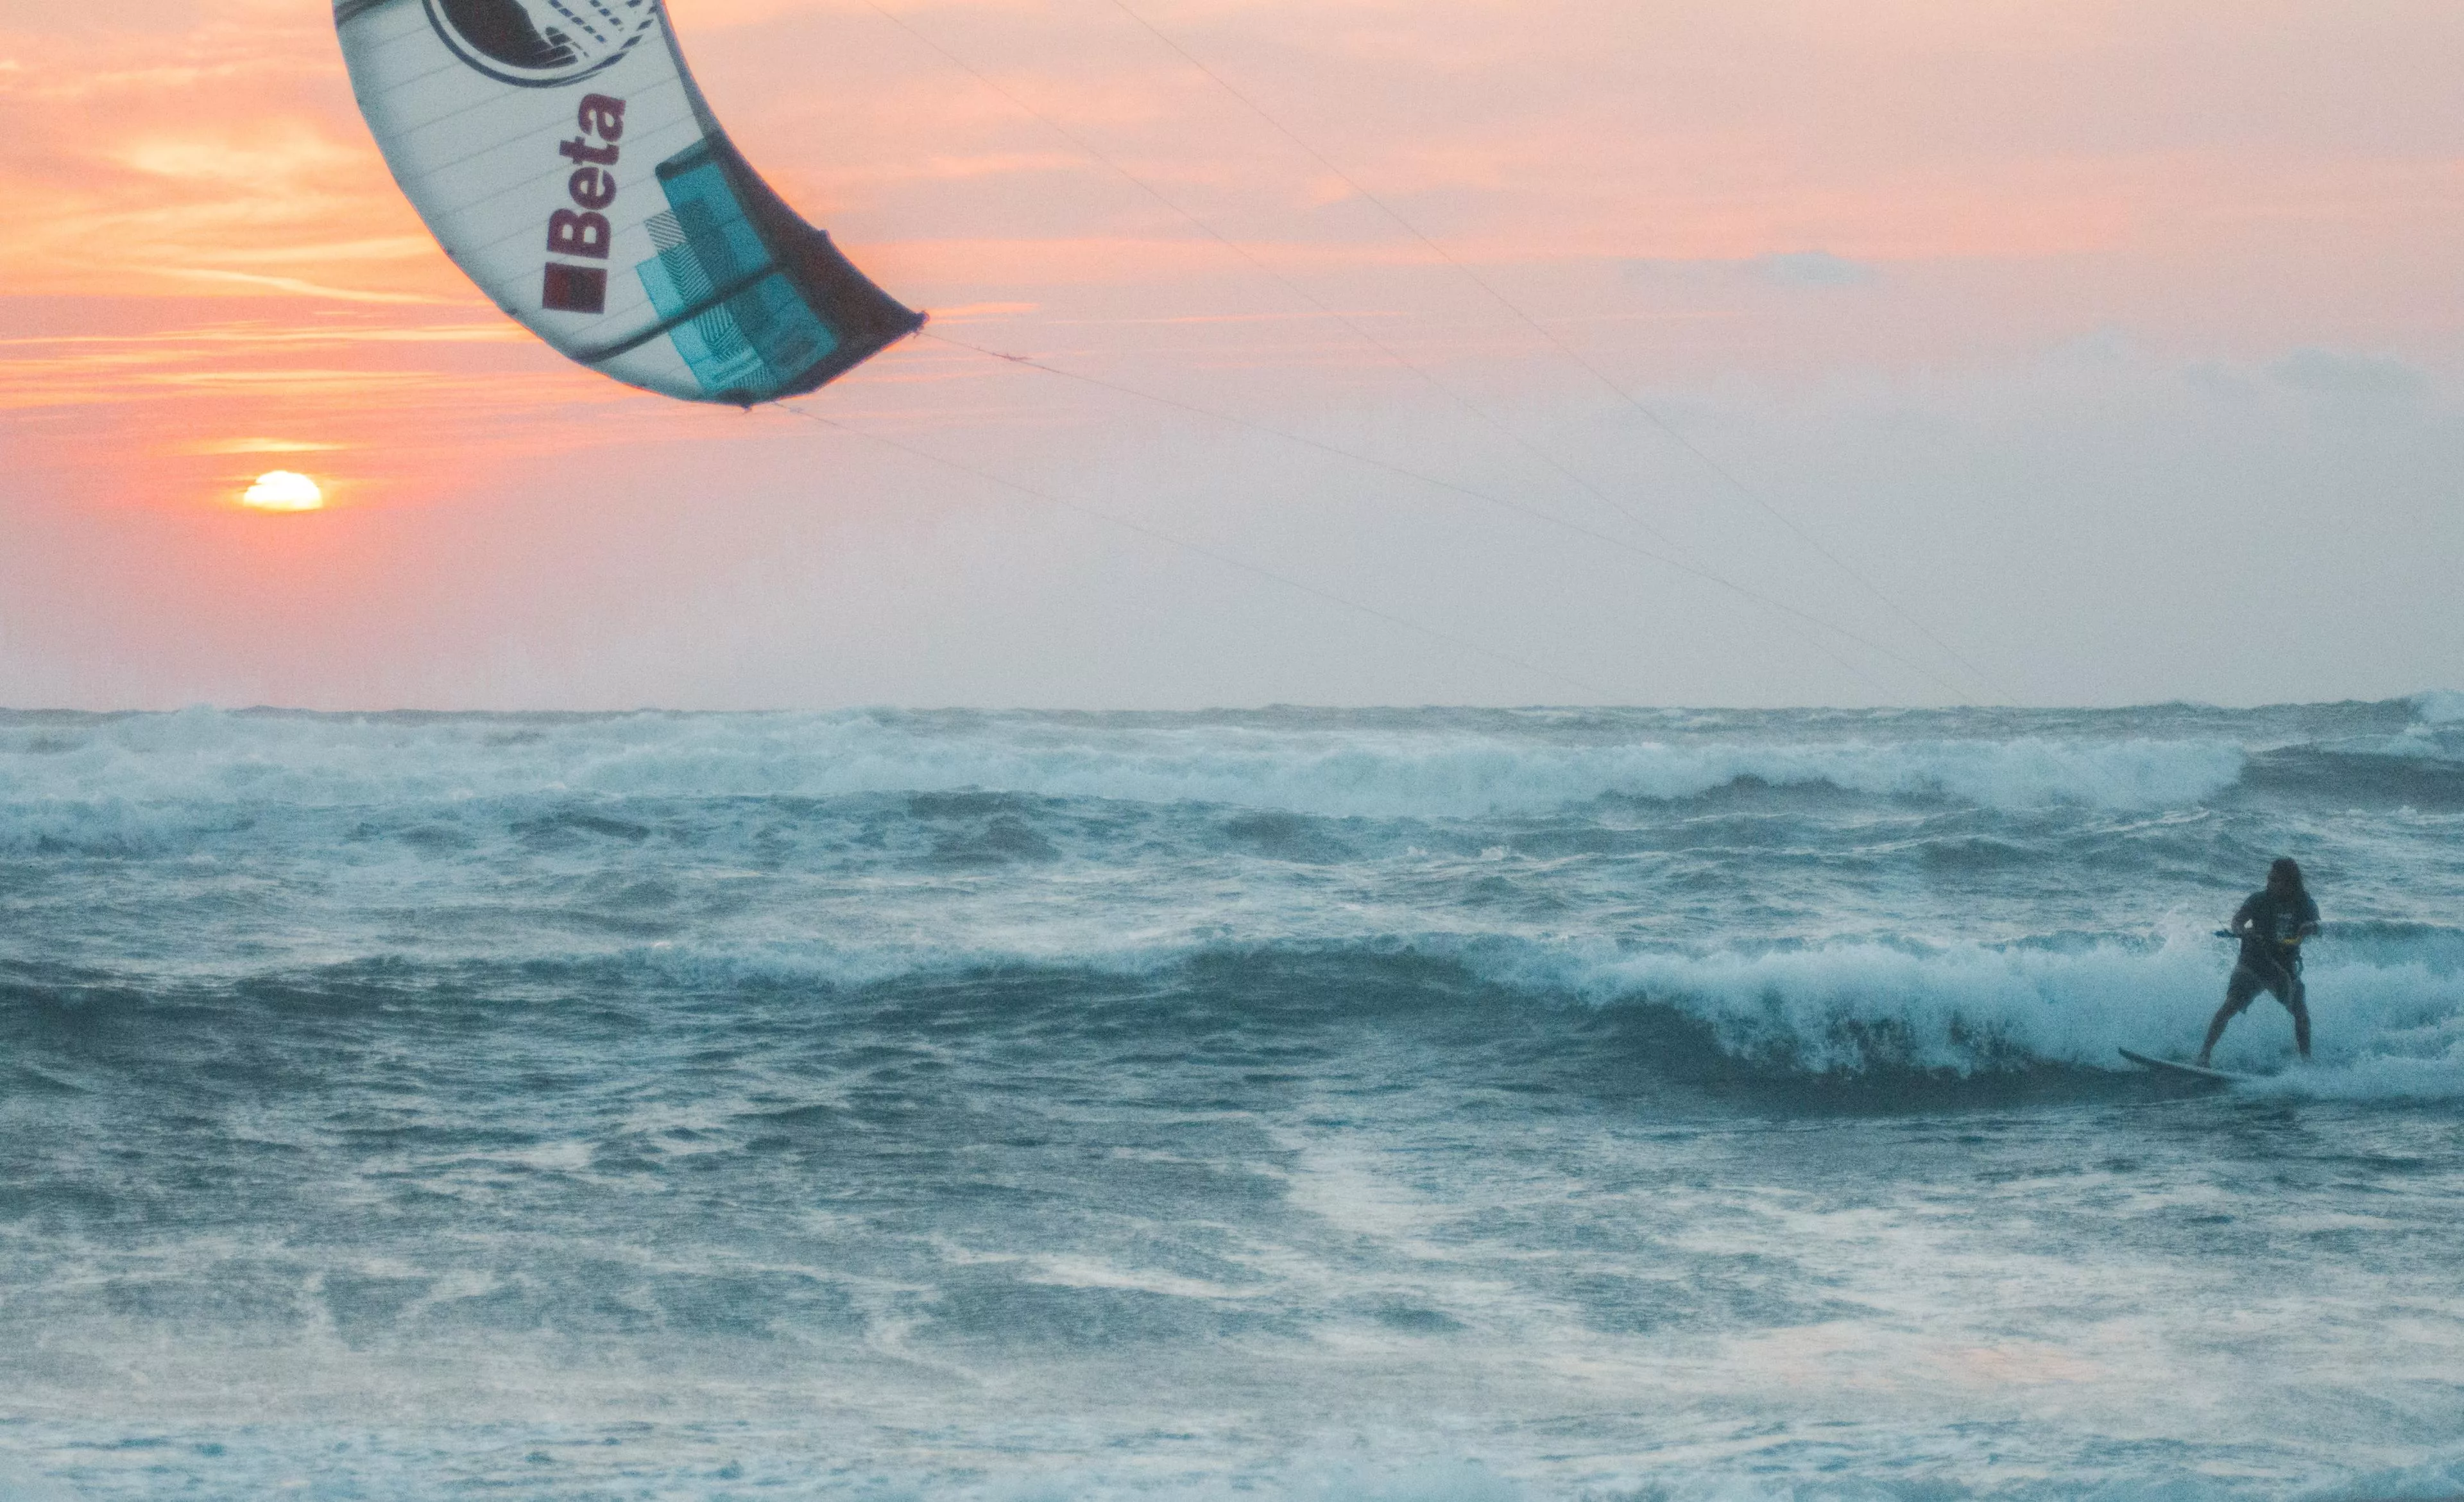 Margaret River Kitesurfing & Windsurfing in Australia, Australia and Oceania | Kitesurfing,Windsurfing - Rated 0.9